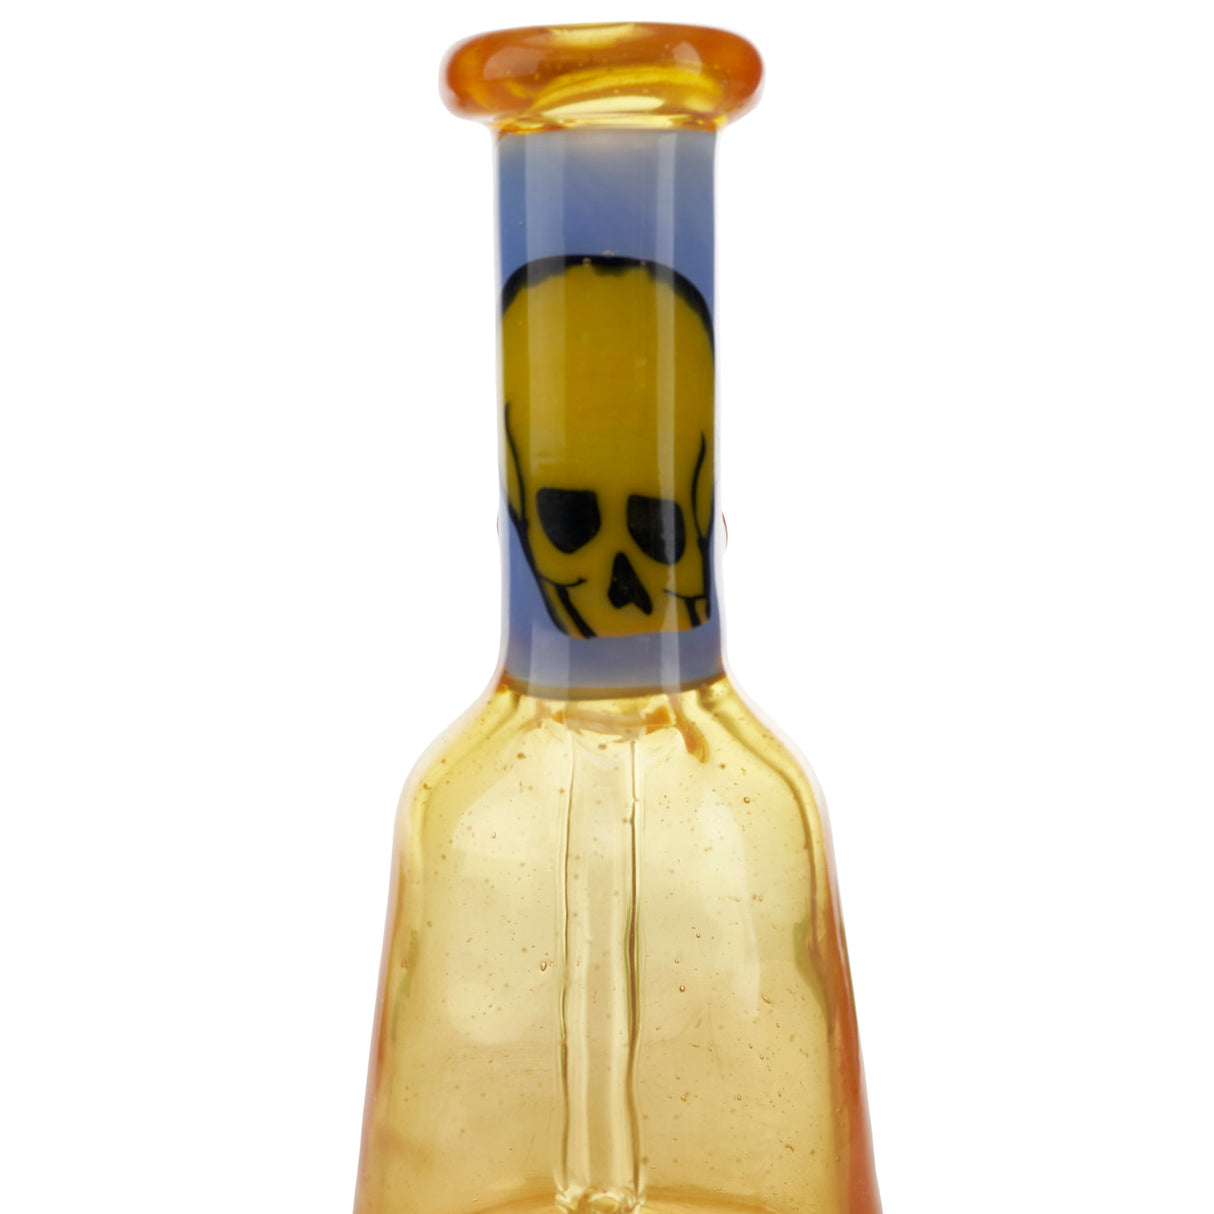 grimm glass skull mini tube orange colored rig for smoking oils